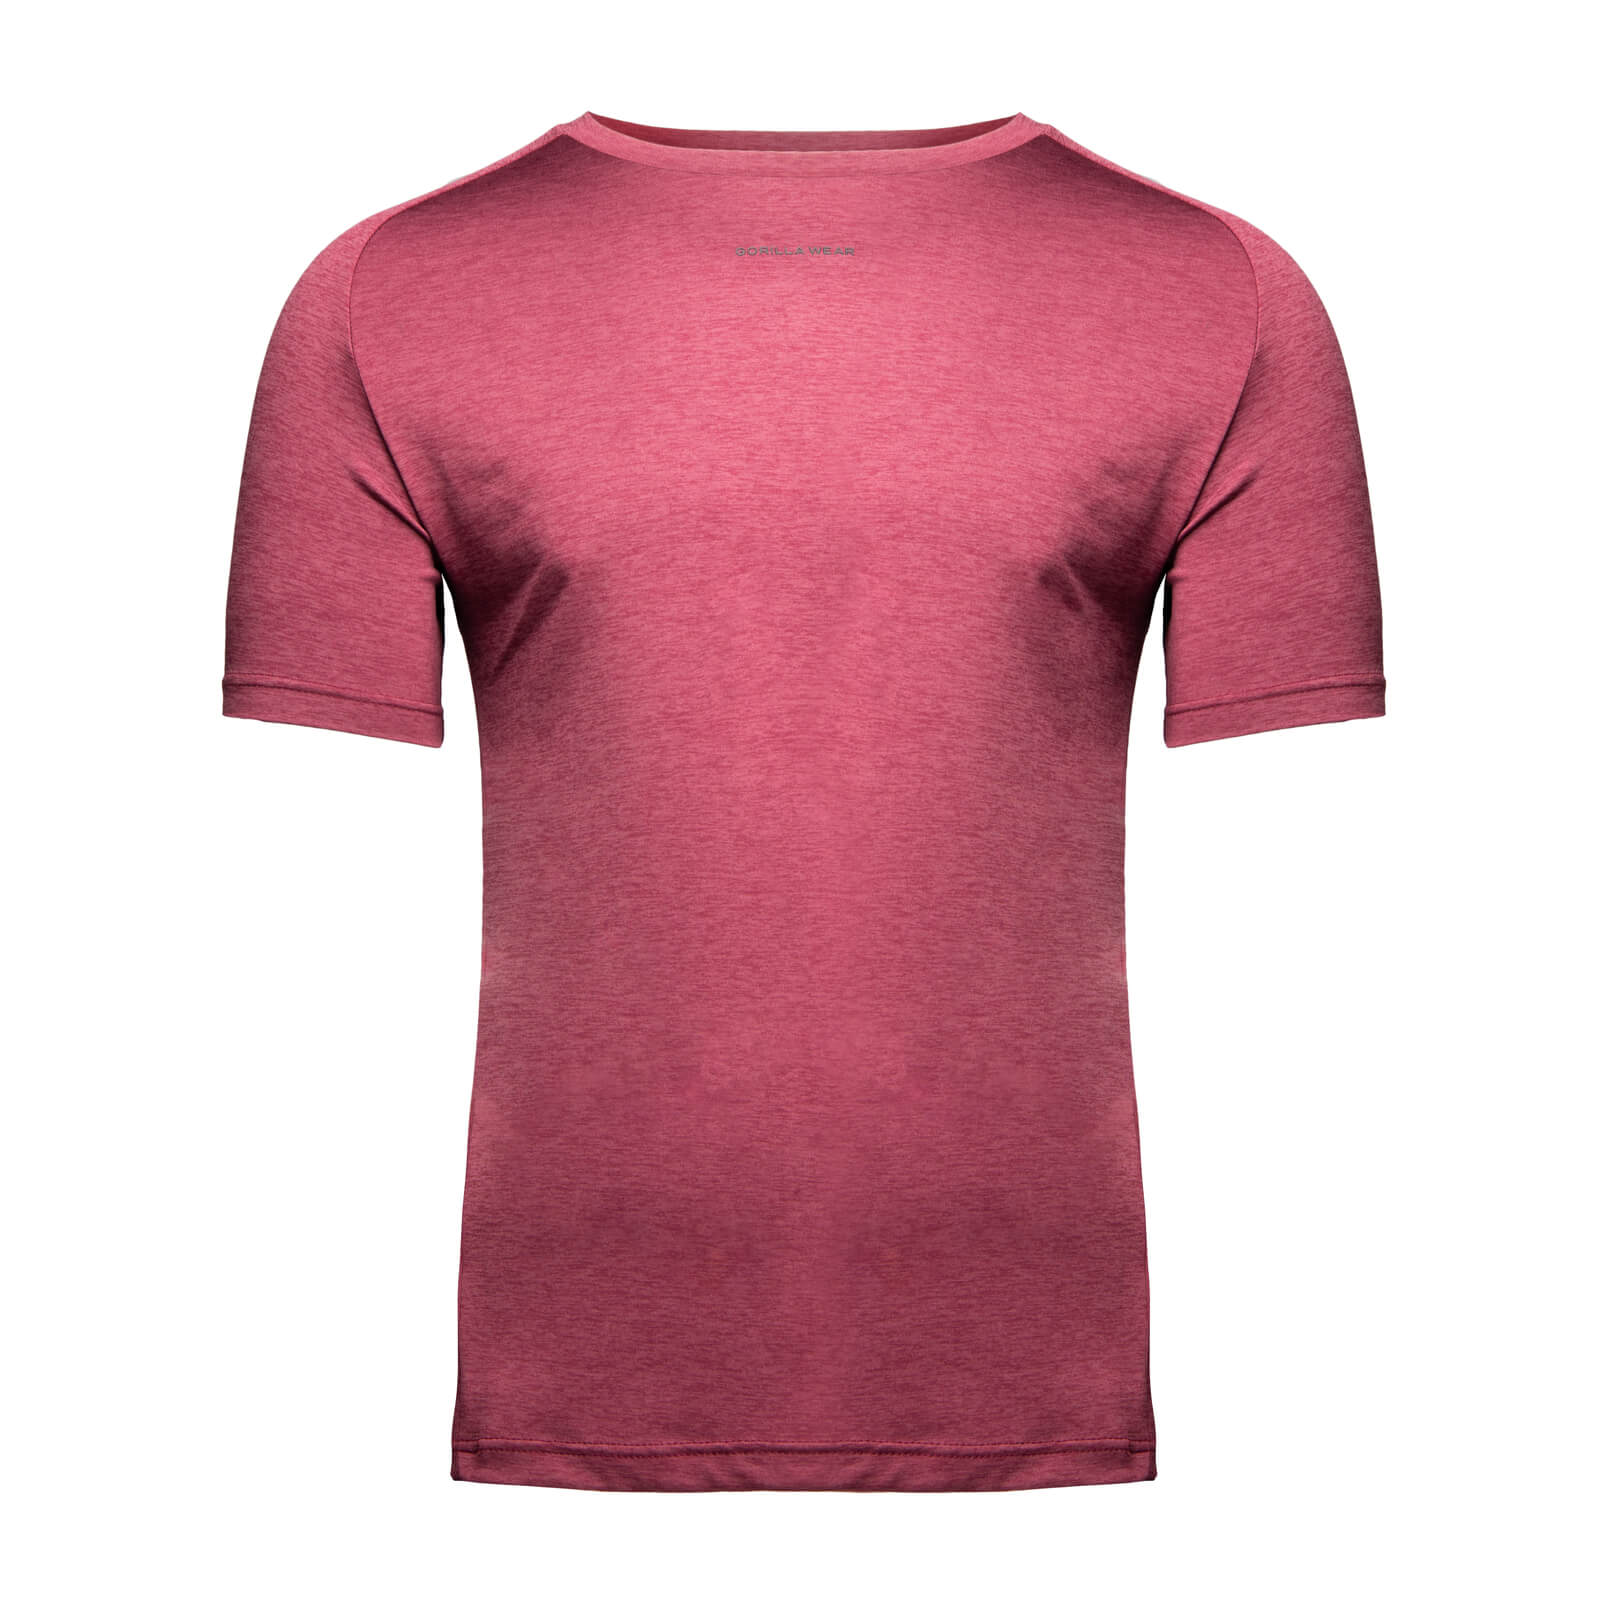 Taos T-Shirt, burgundy red, Gorilla Wear